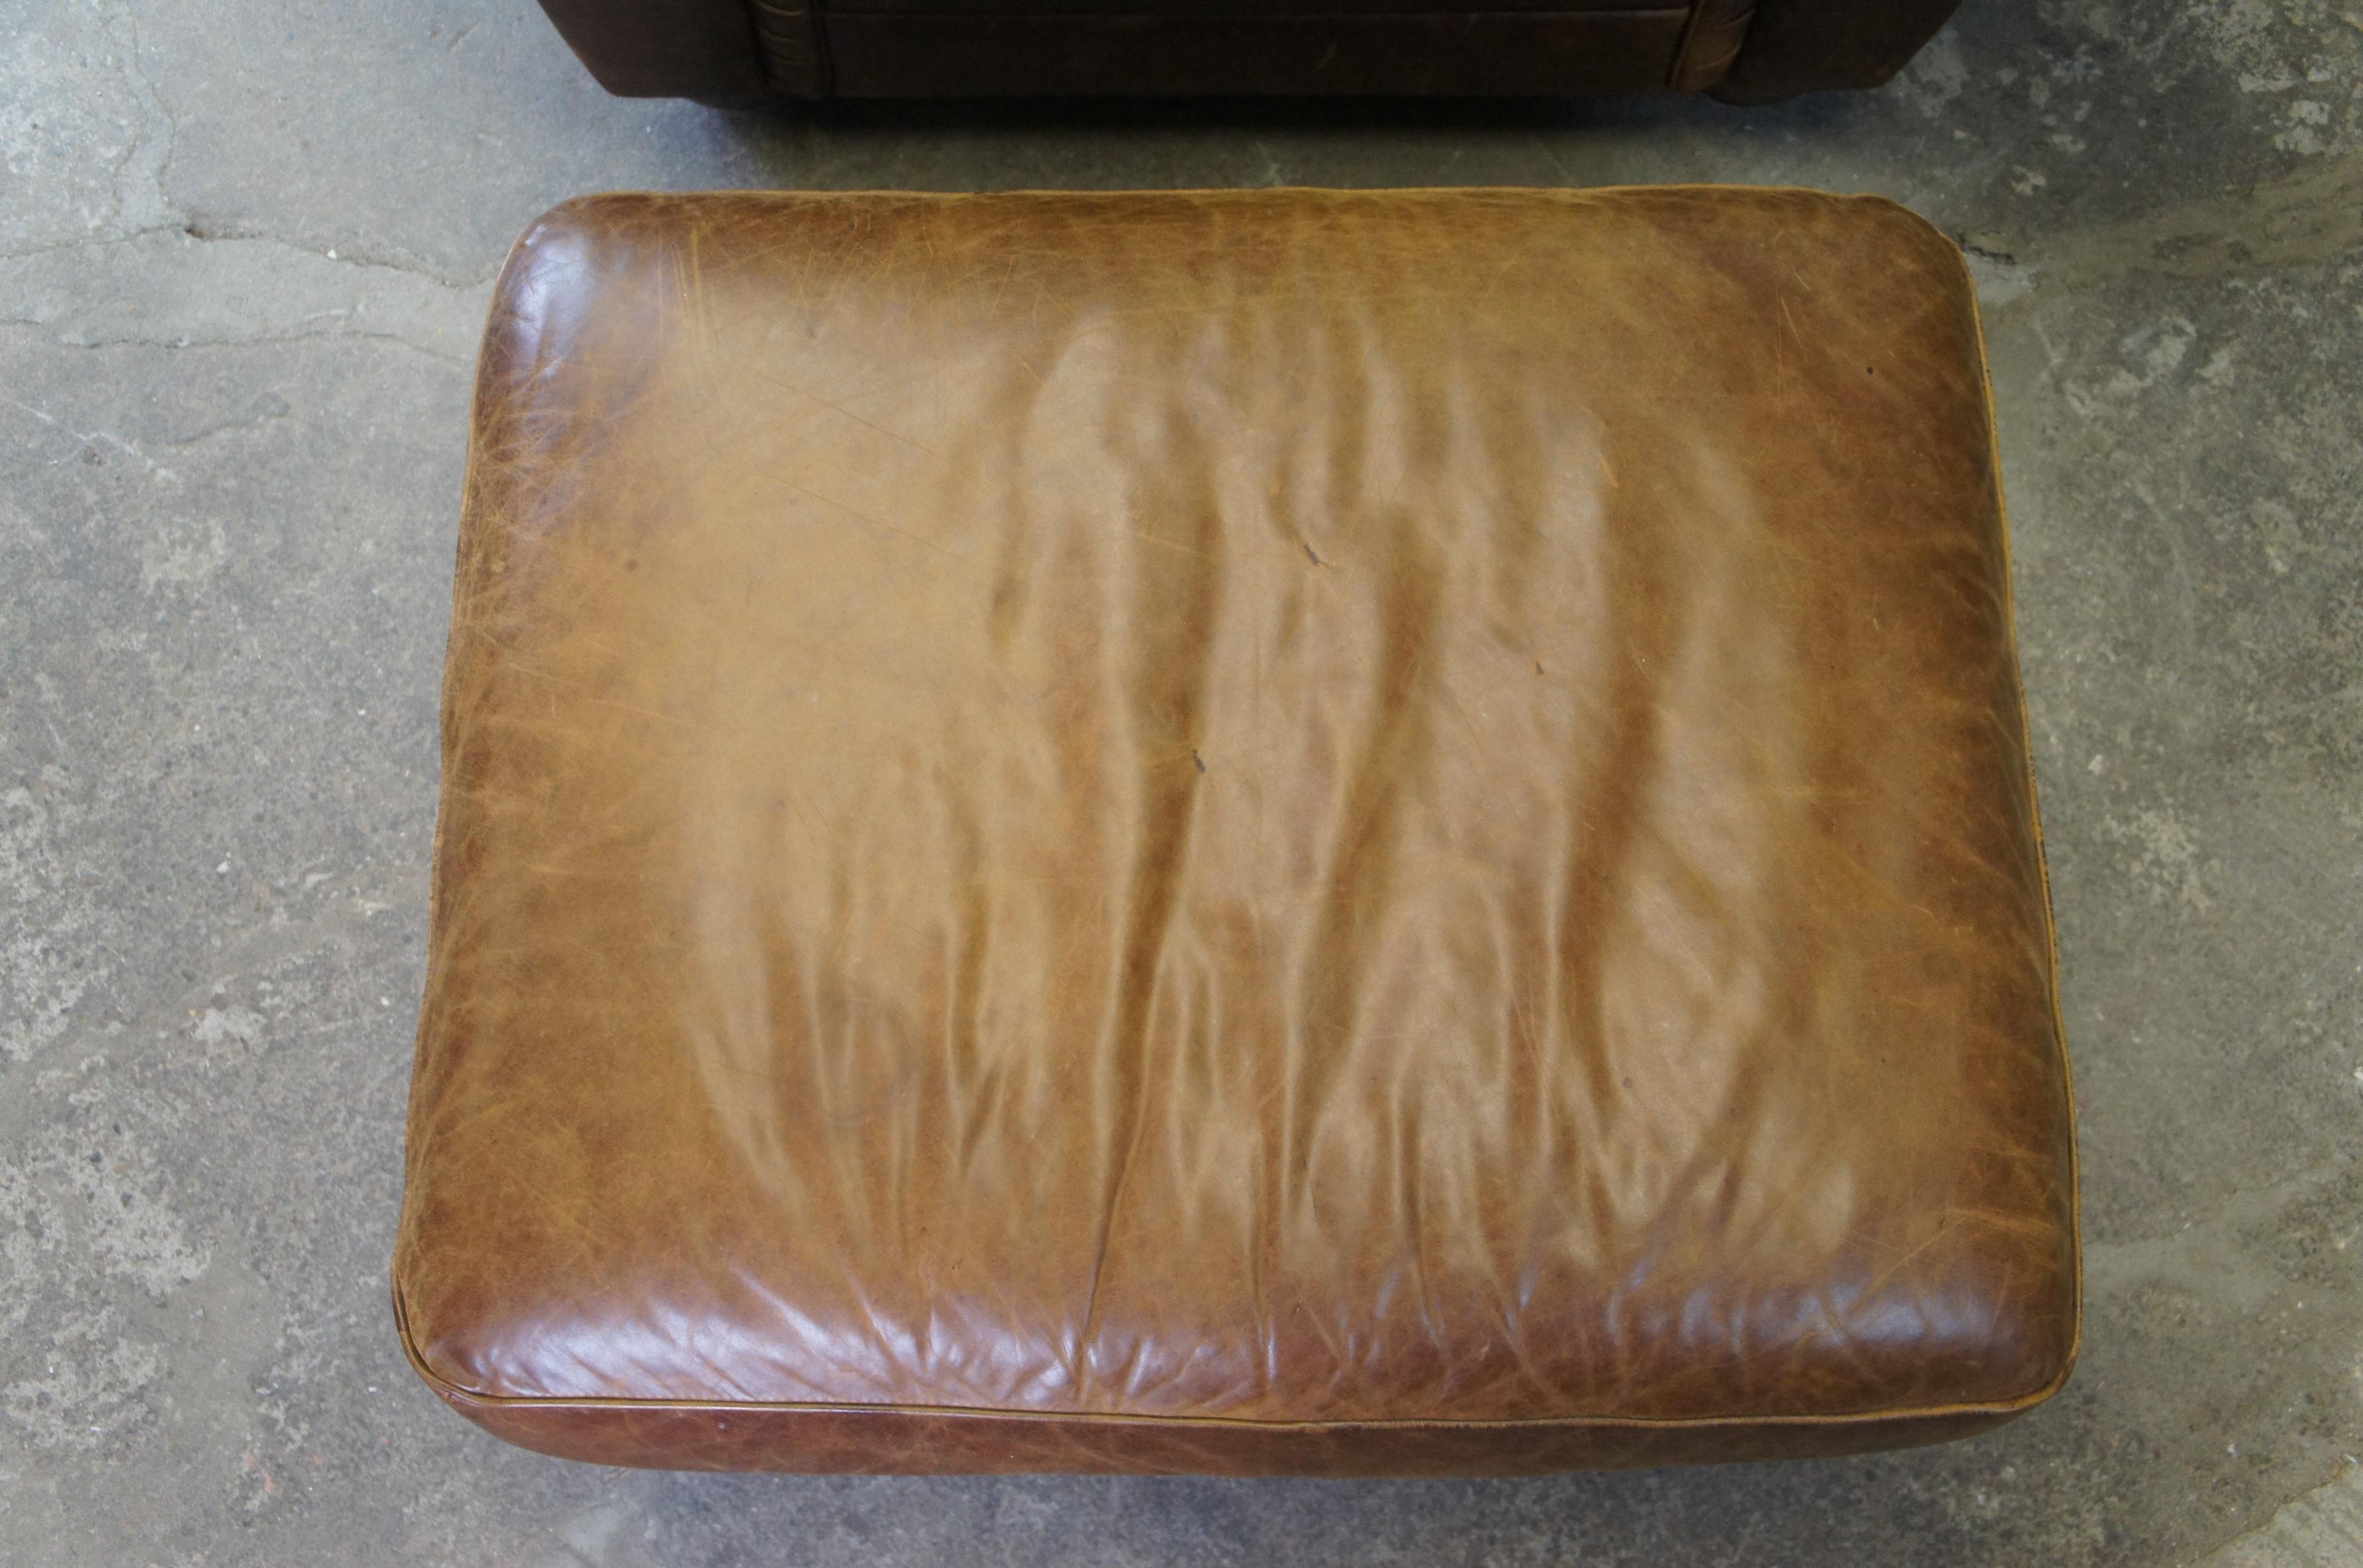 natuzzi leather chair and ottoman